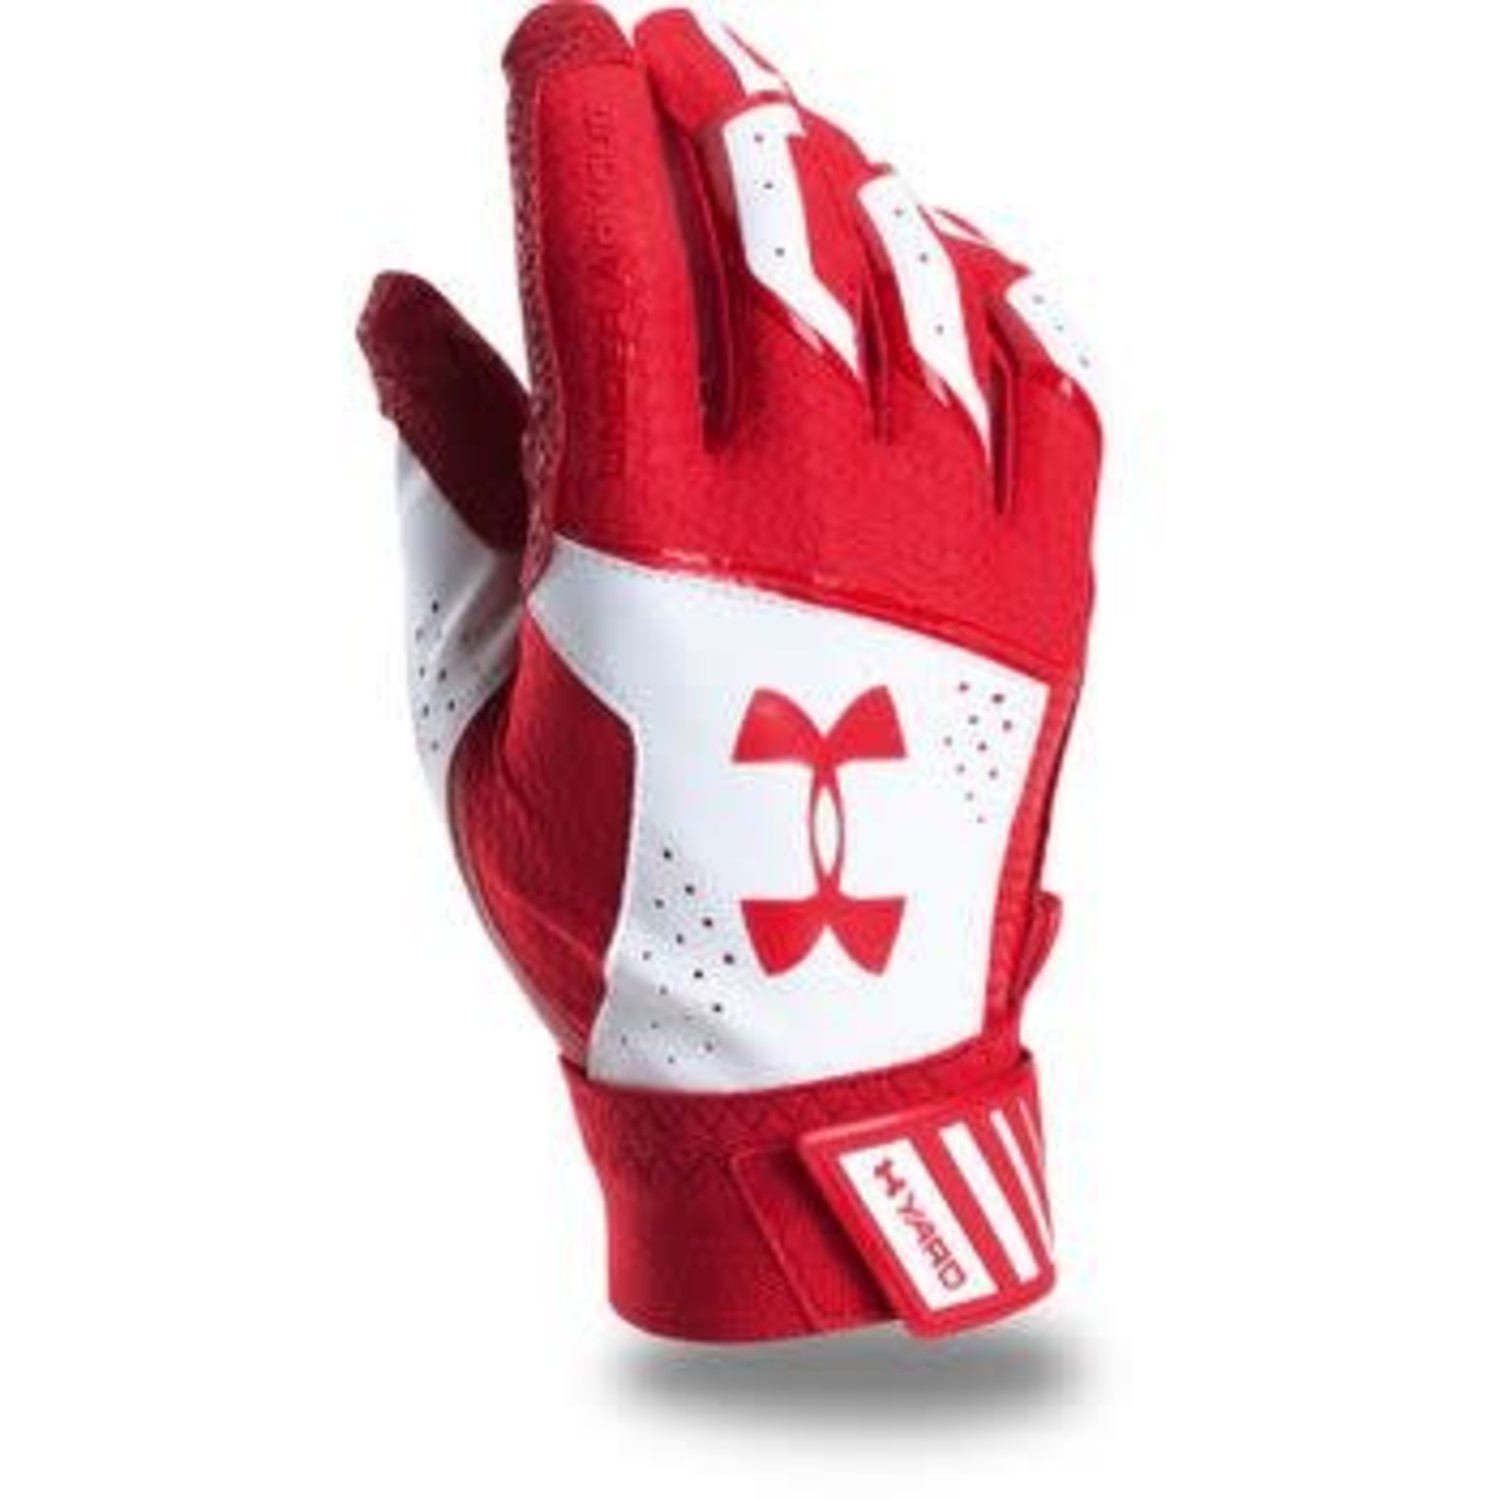 ua yard batting gloves